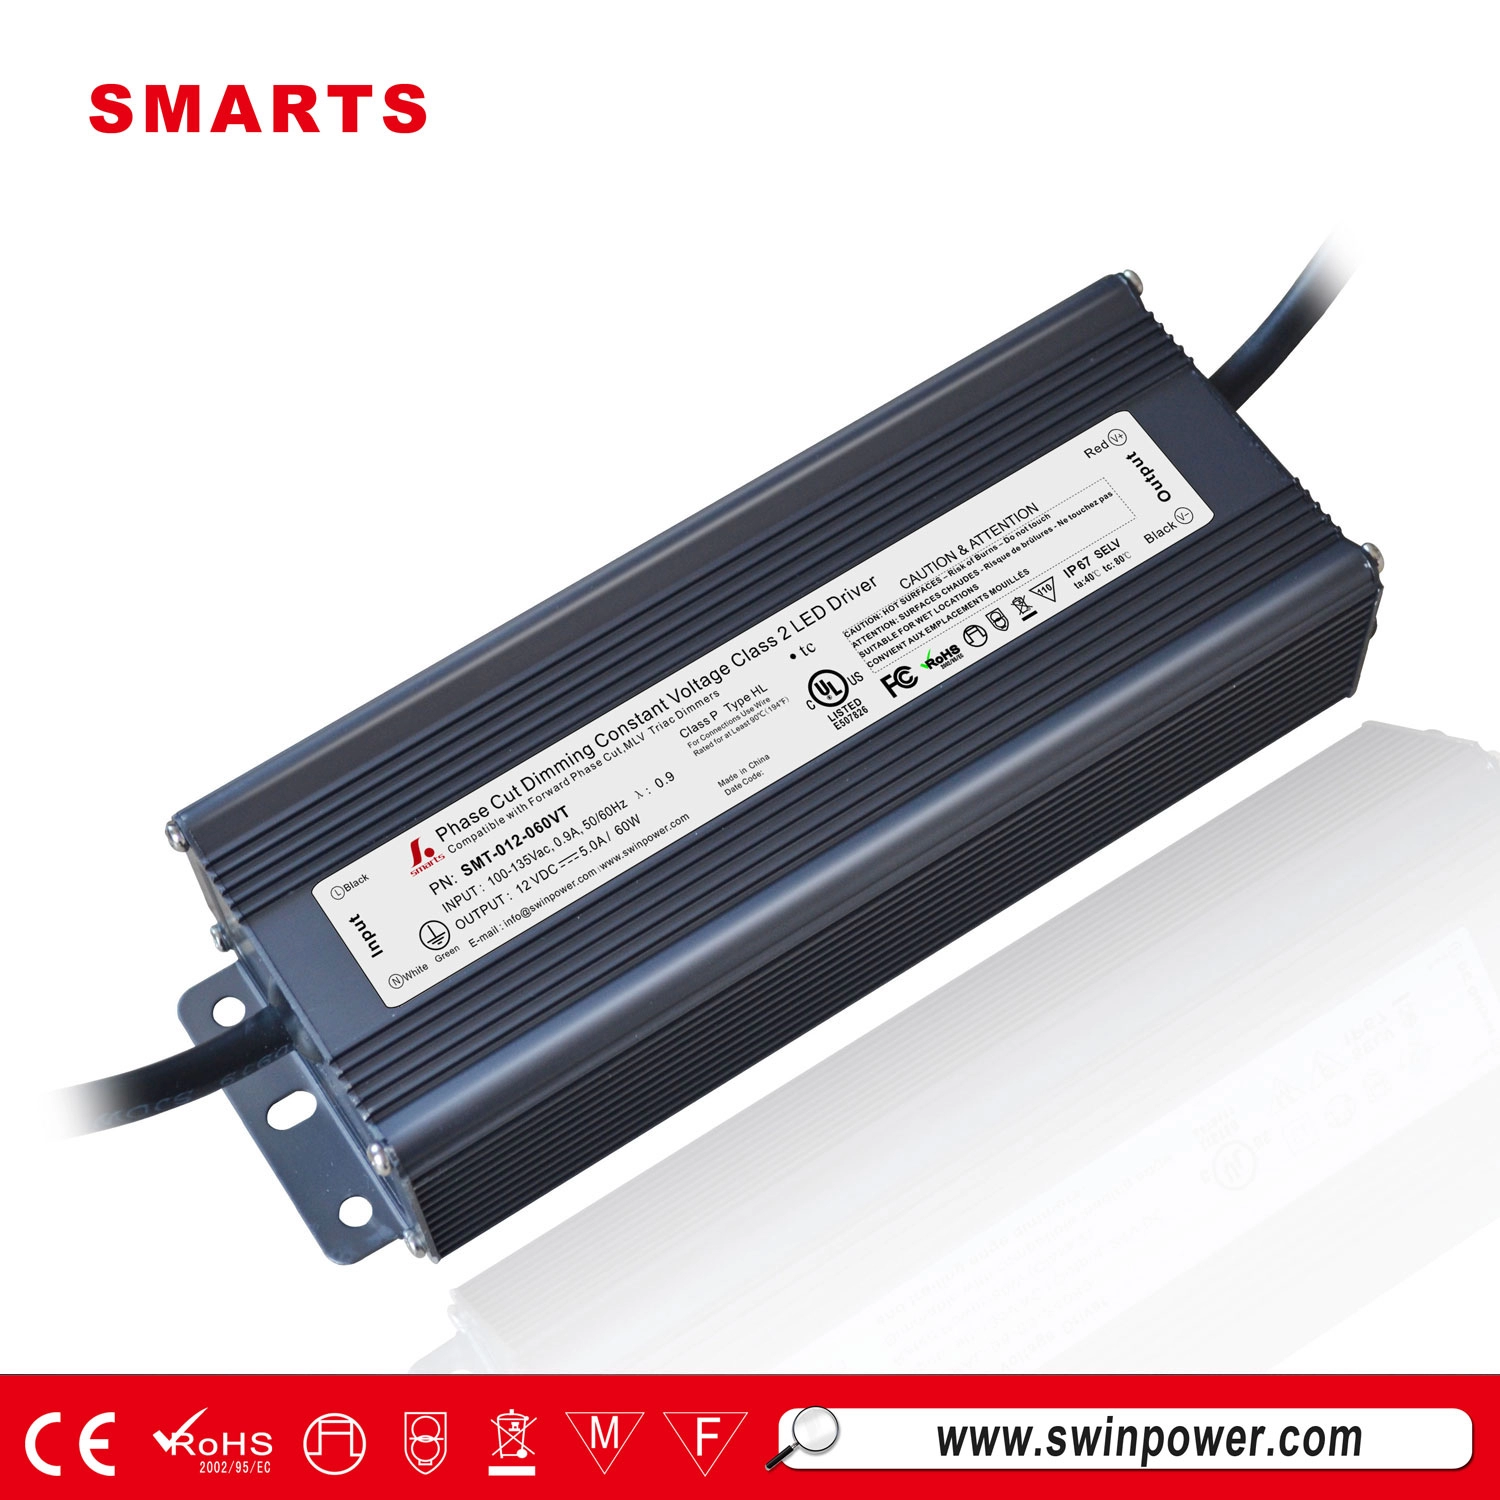 LEDパネルライトドライバー12v60wトライアック調光可能定電圧LED電源